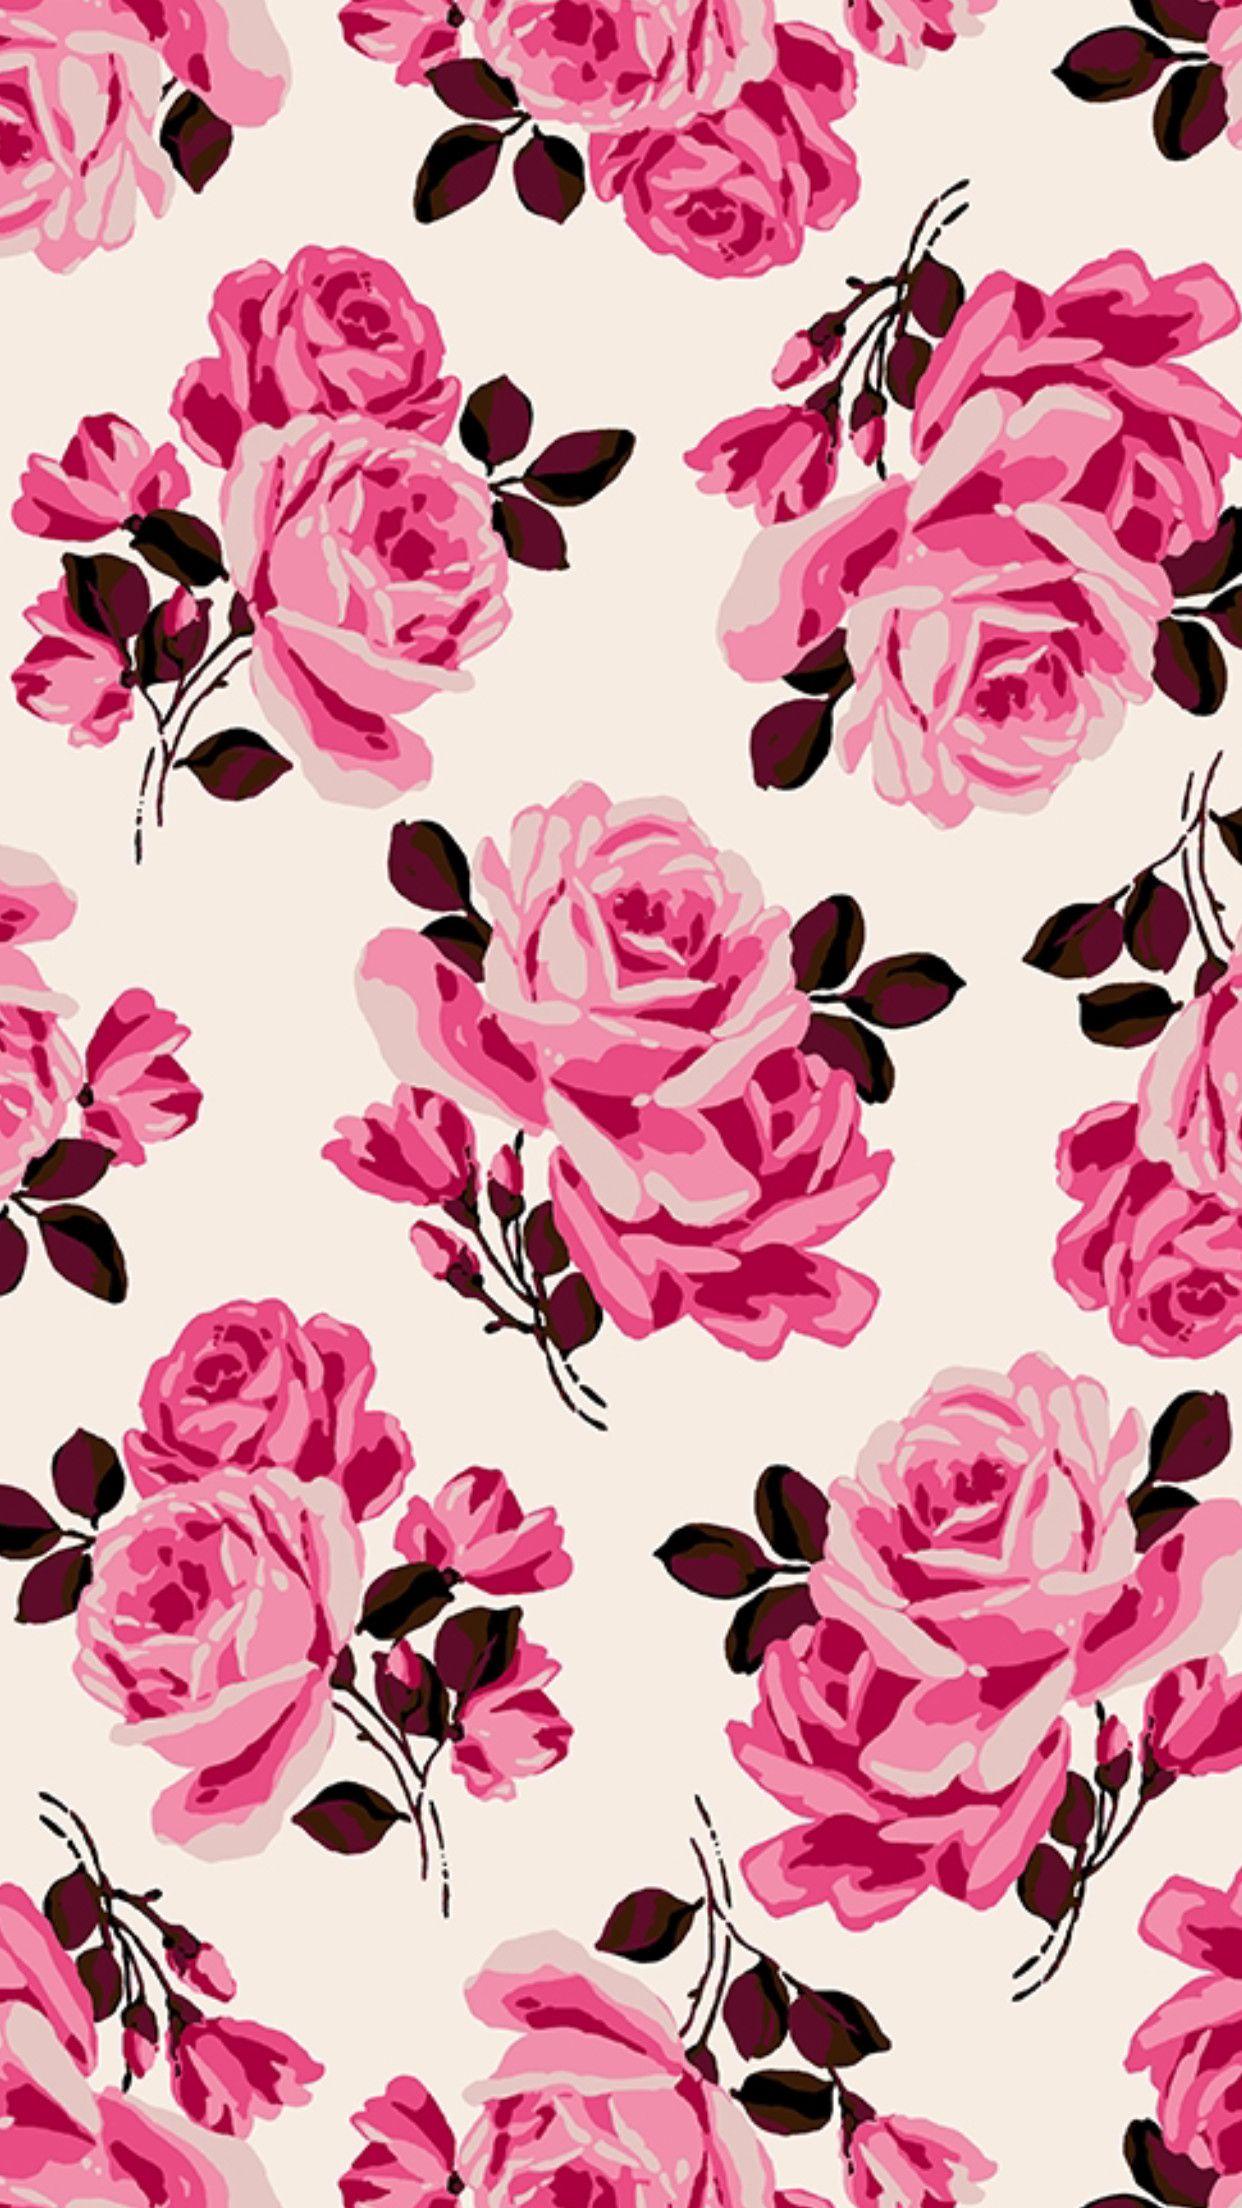 Beauty roses. Love Wallpaper BackgroundPink Wallpaper